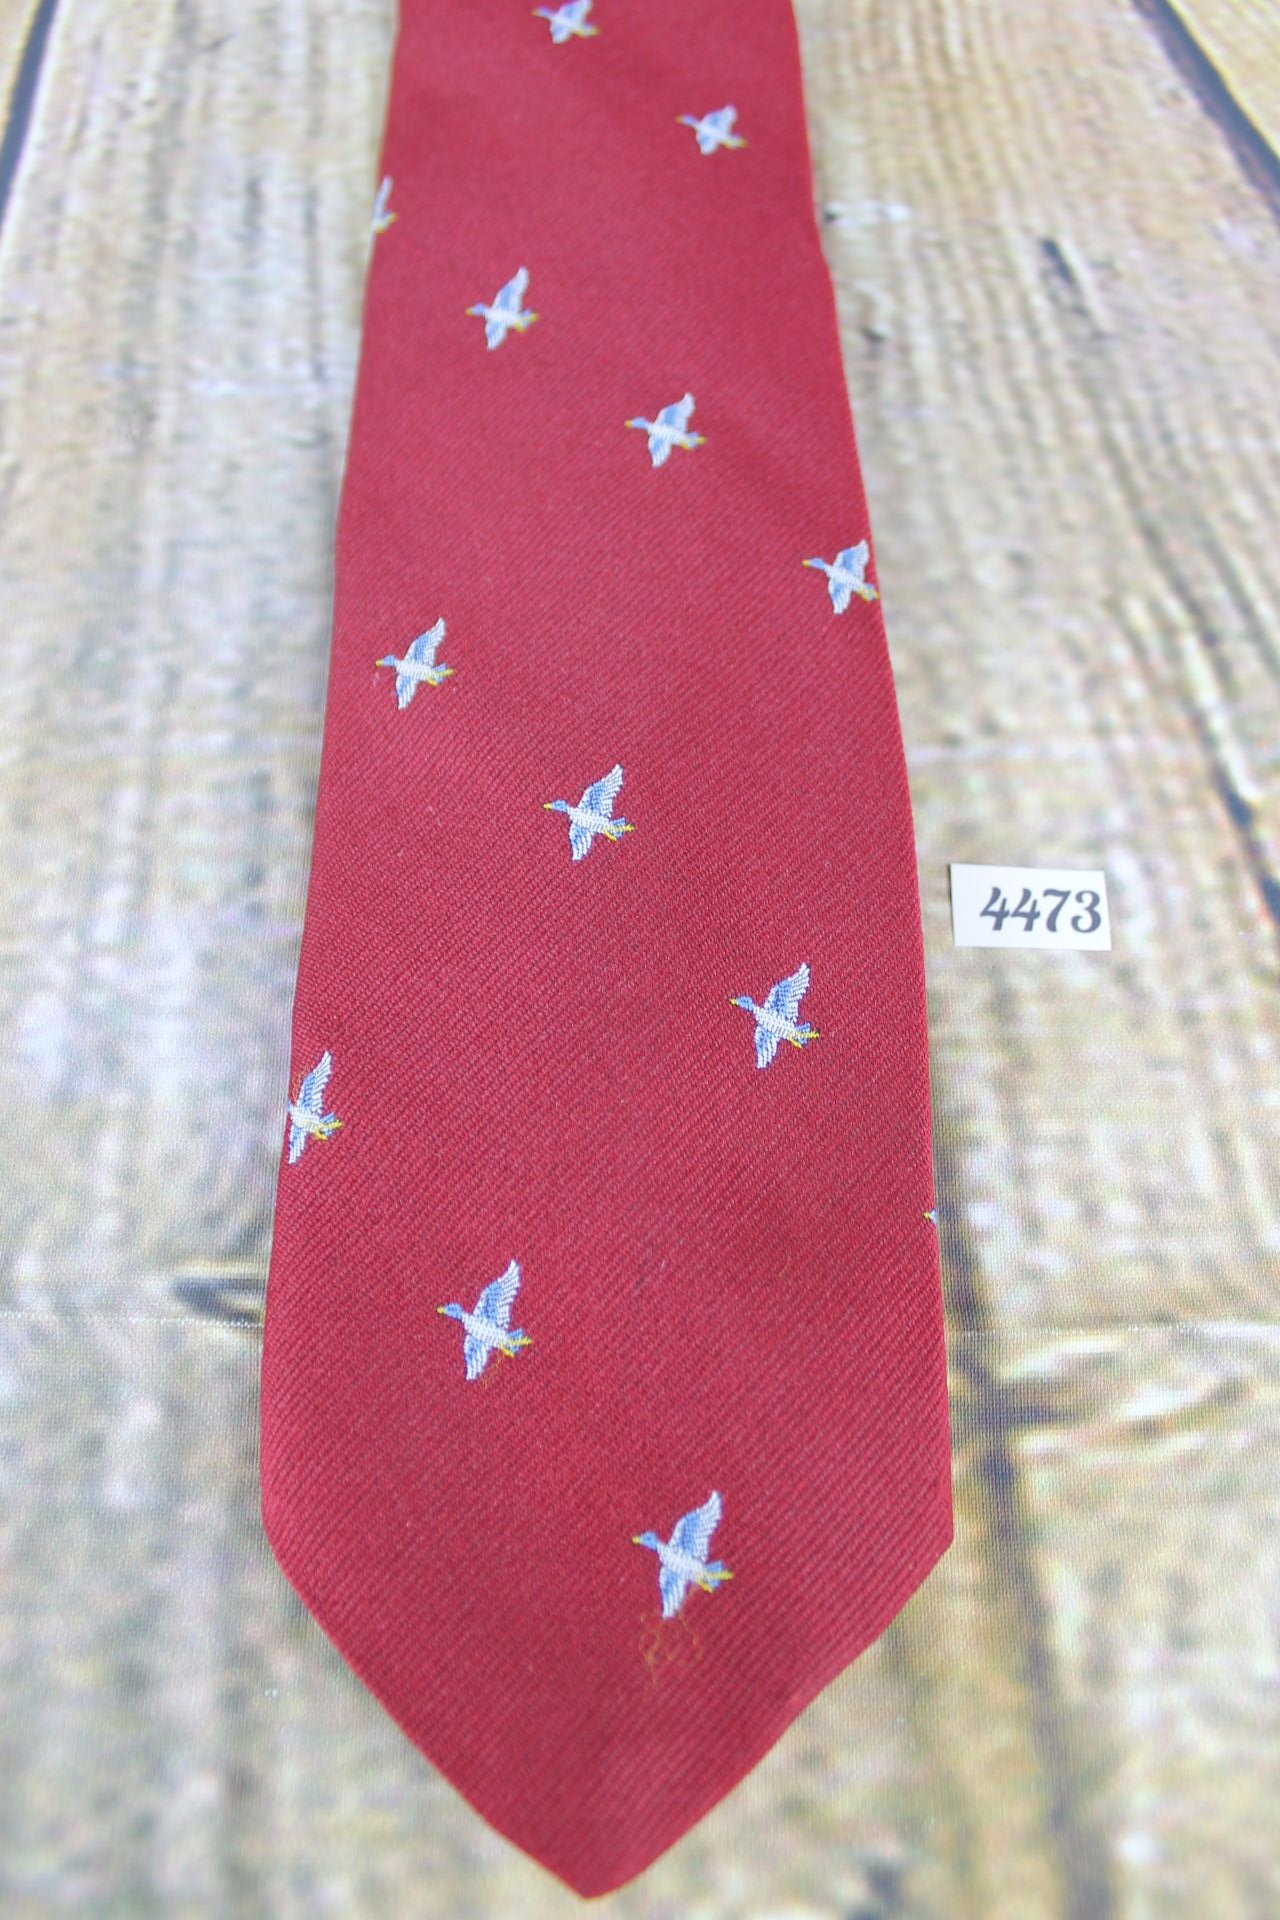 Vintage Smith & Welton burgundy duck hunting shooting design skinny tie 1960s